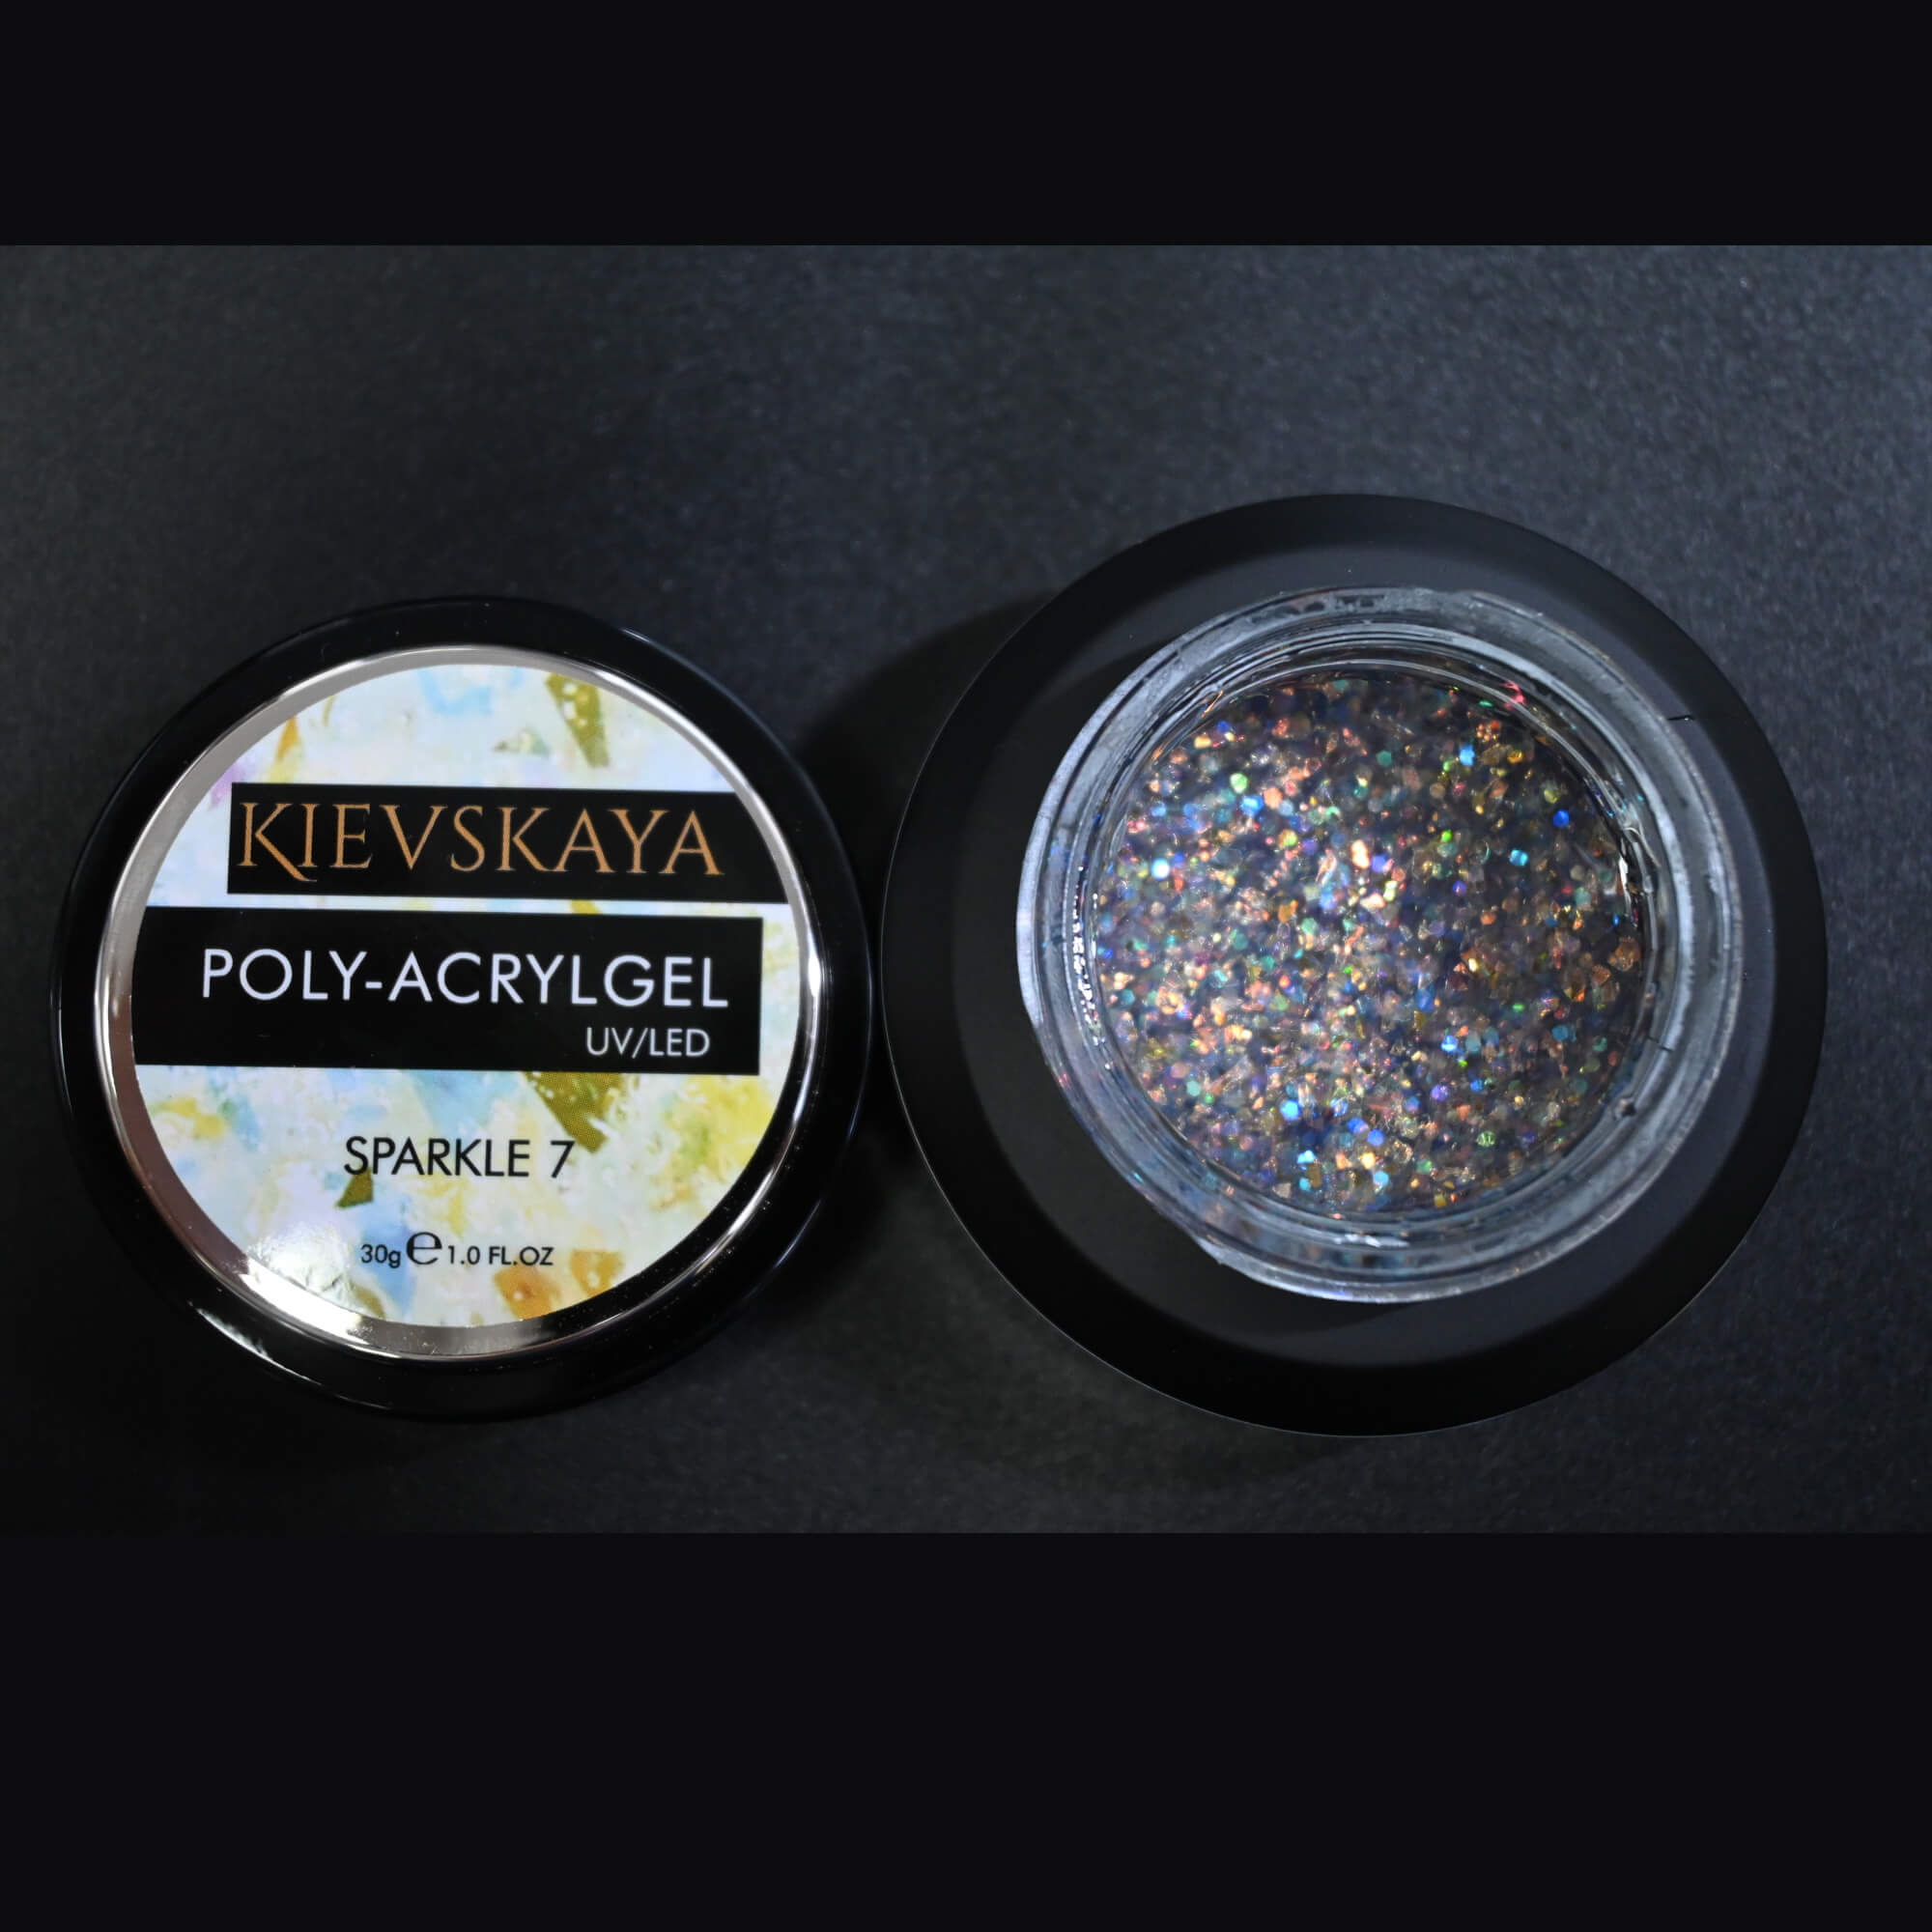 Poly-acrylgel Sparkle Kievskaya 30gr-sparkle07 - Sparkle07 - Everin.ro